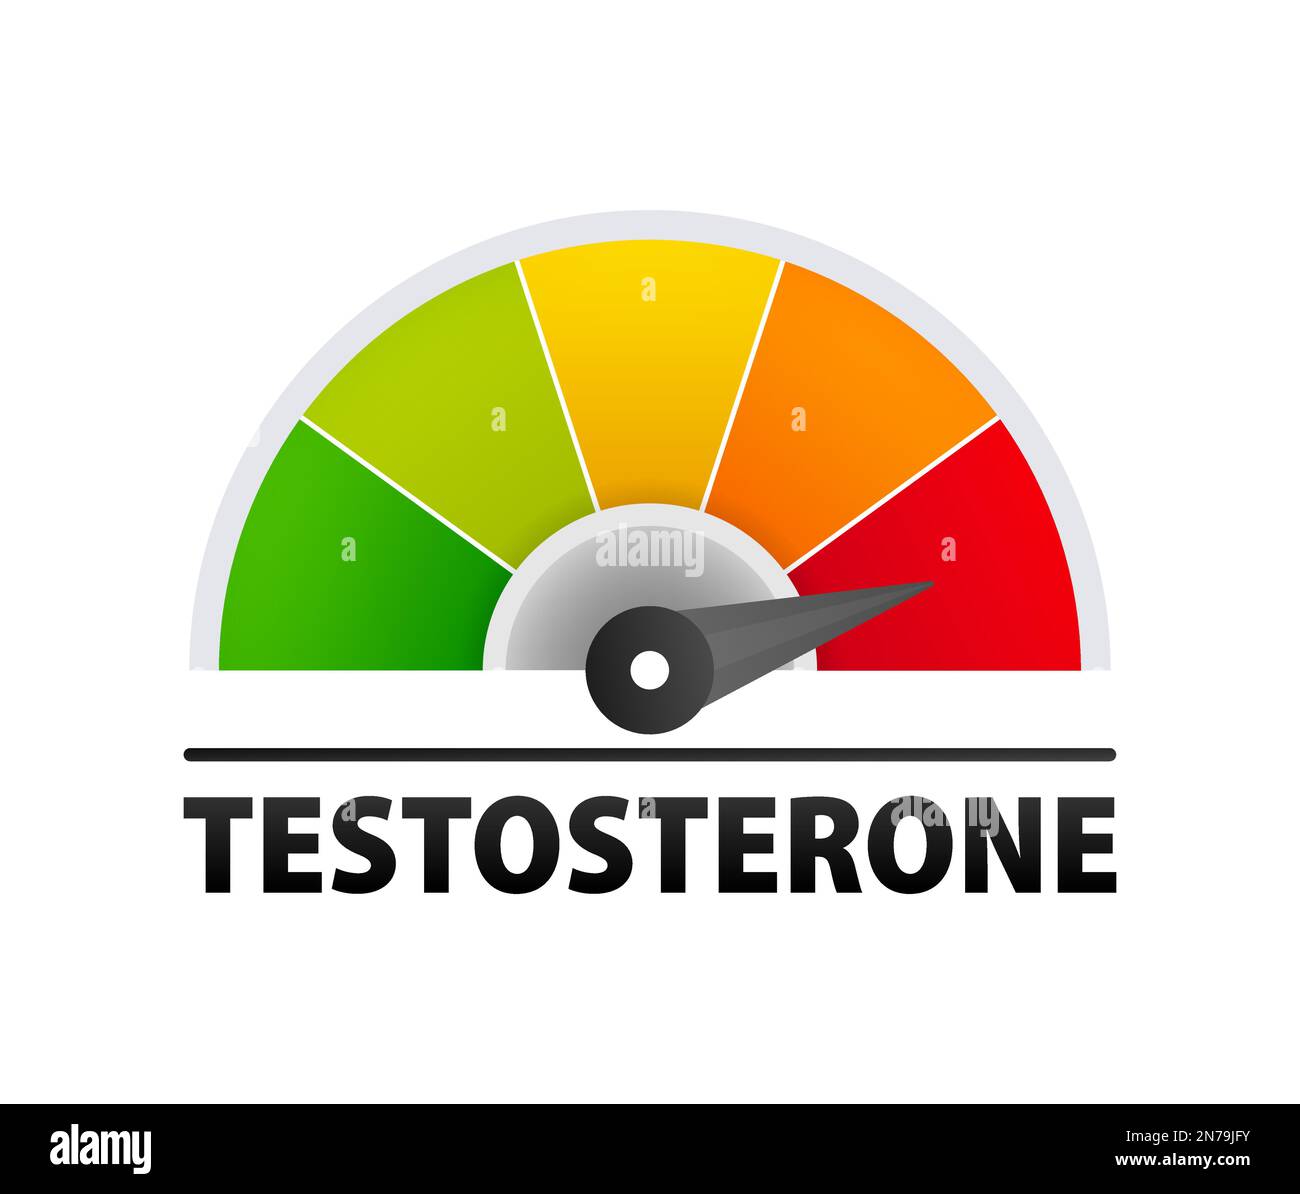 Testosterone Level Metering Testosterone Hormone Speedometer Indicators Stock Vector Image 